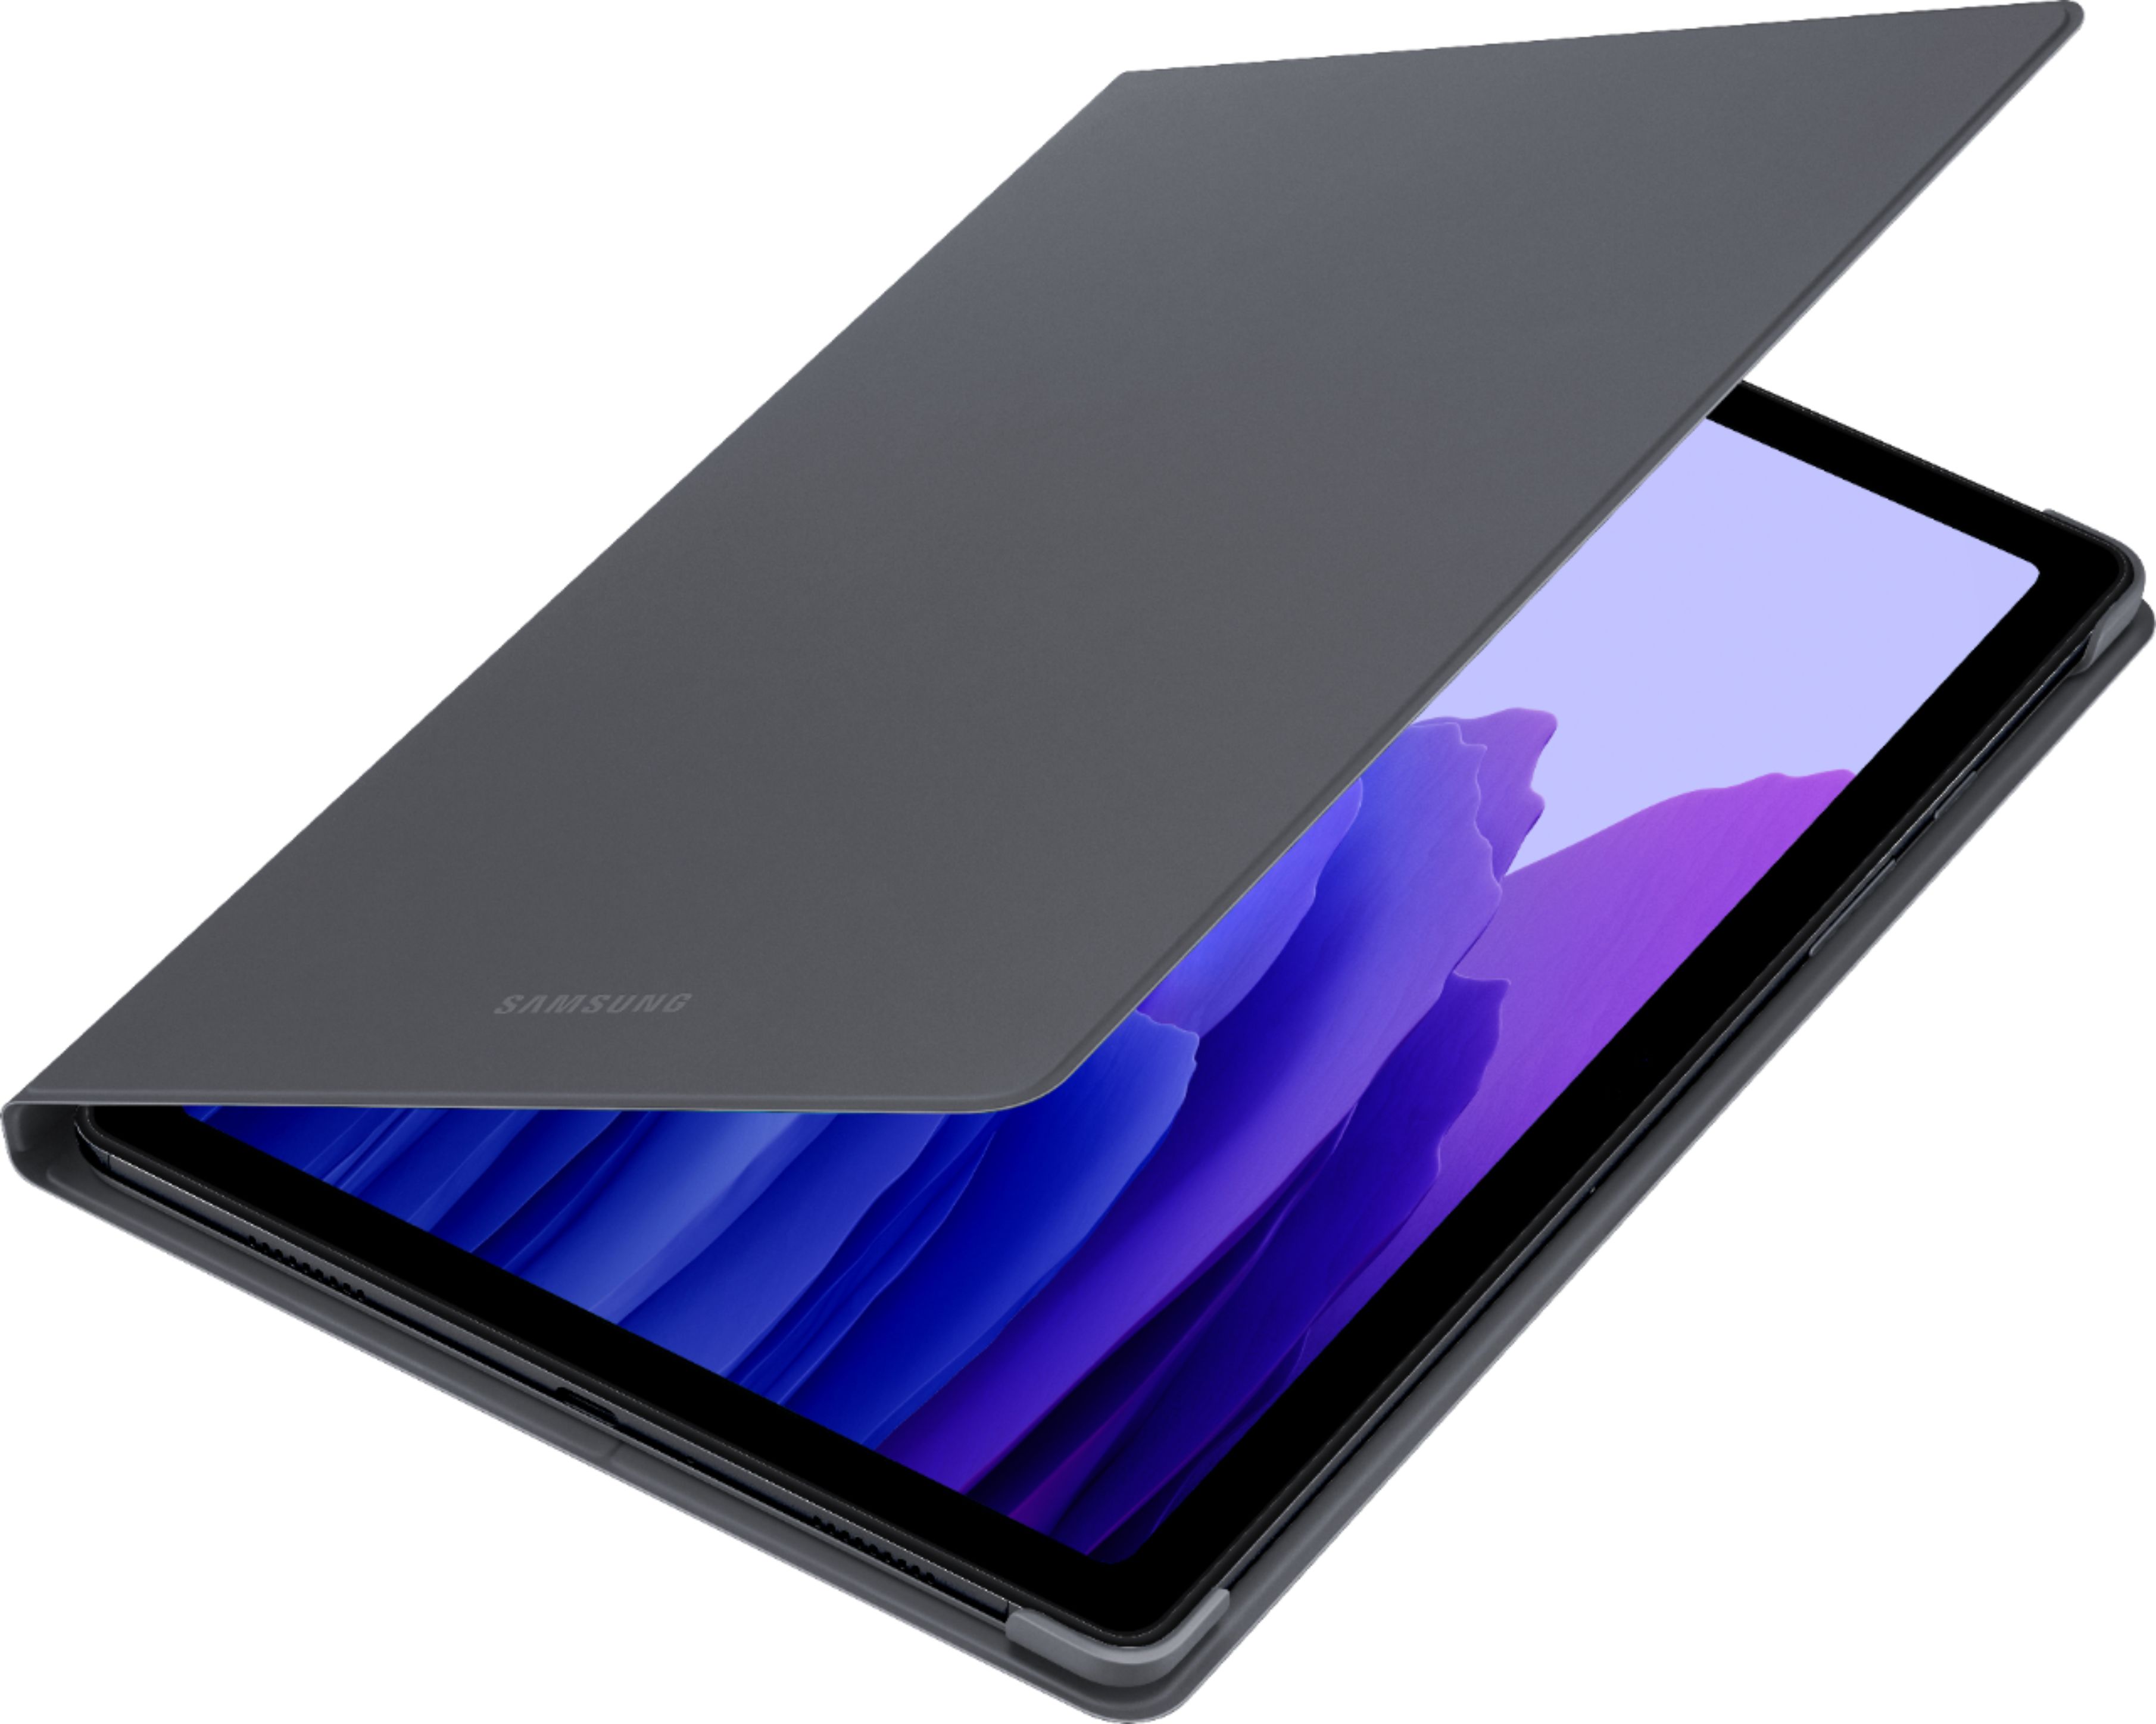 Brand New Samsung Galaxy Tab A7 - 10.4" Wi-Fi Only 64GB Tablet - Gray